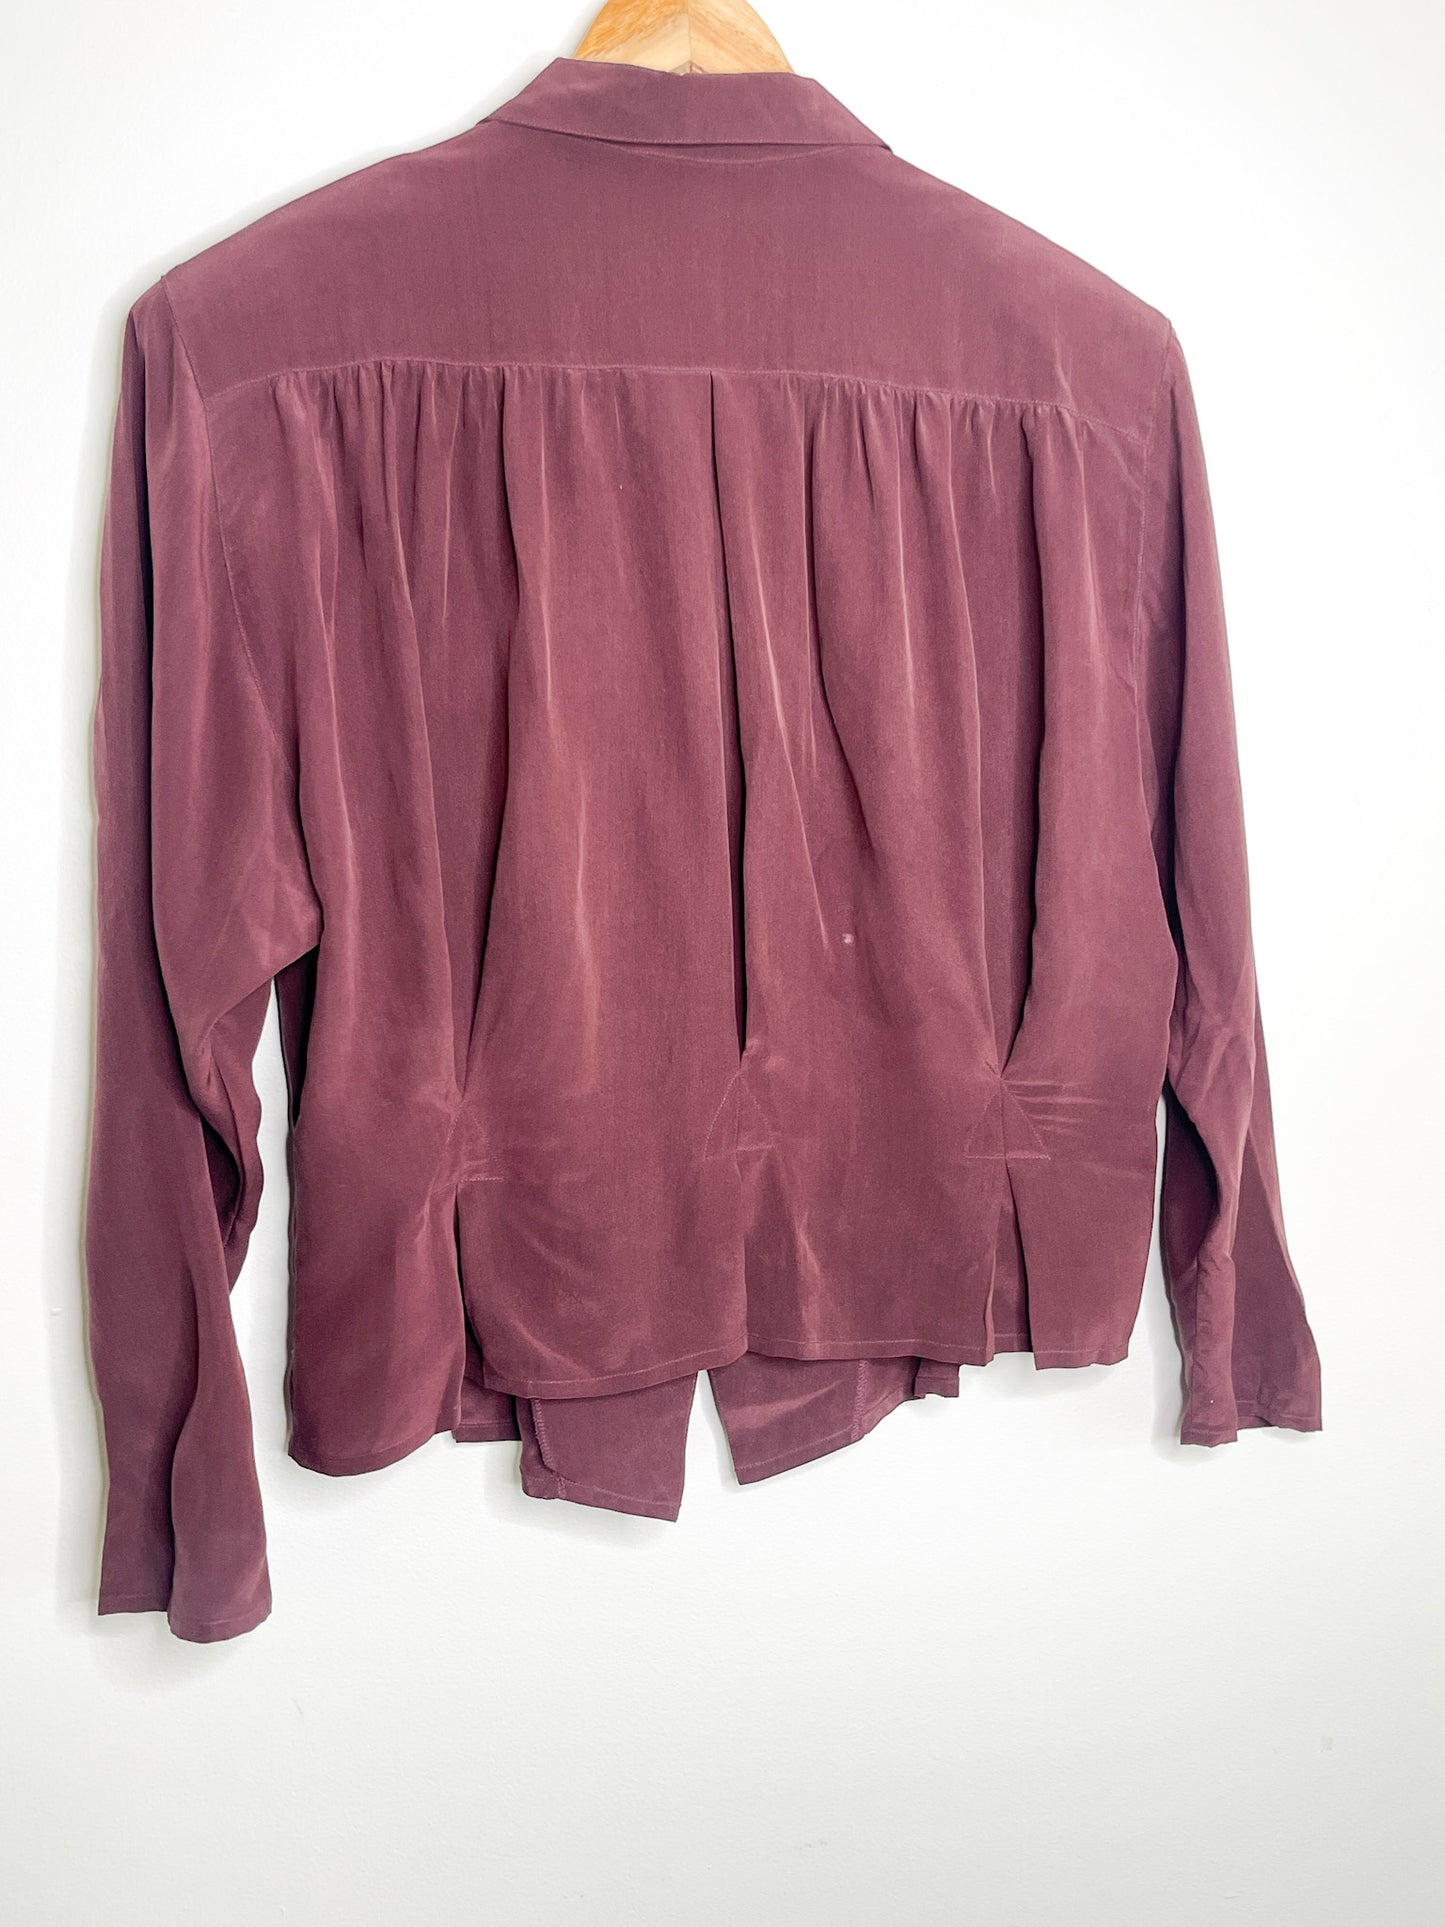 Marie Marconi Burgundy Blouse | Vintage Burgundy Blouse Long Sleeve | Vintage Silk Blouse